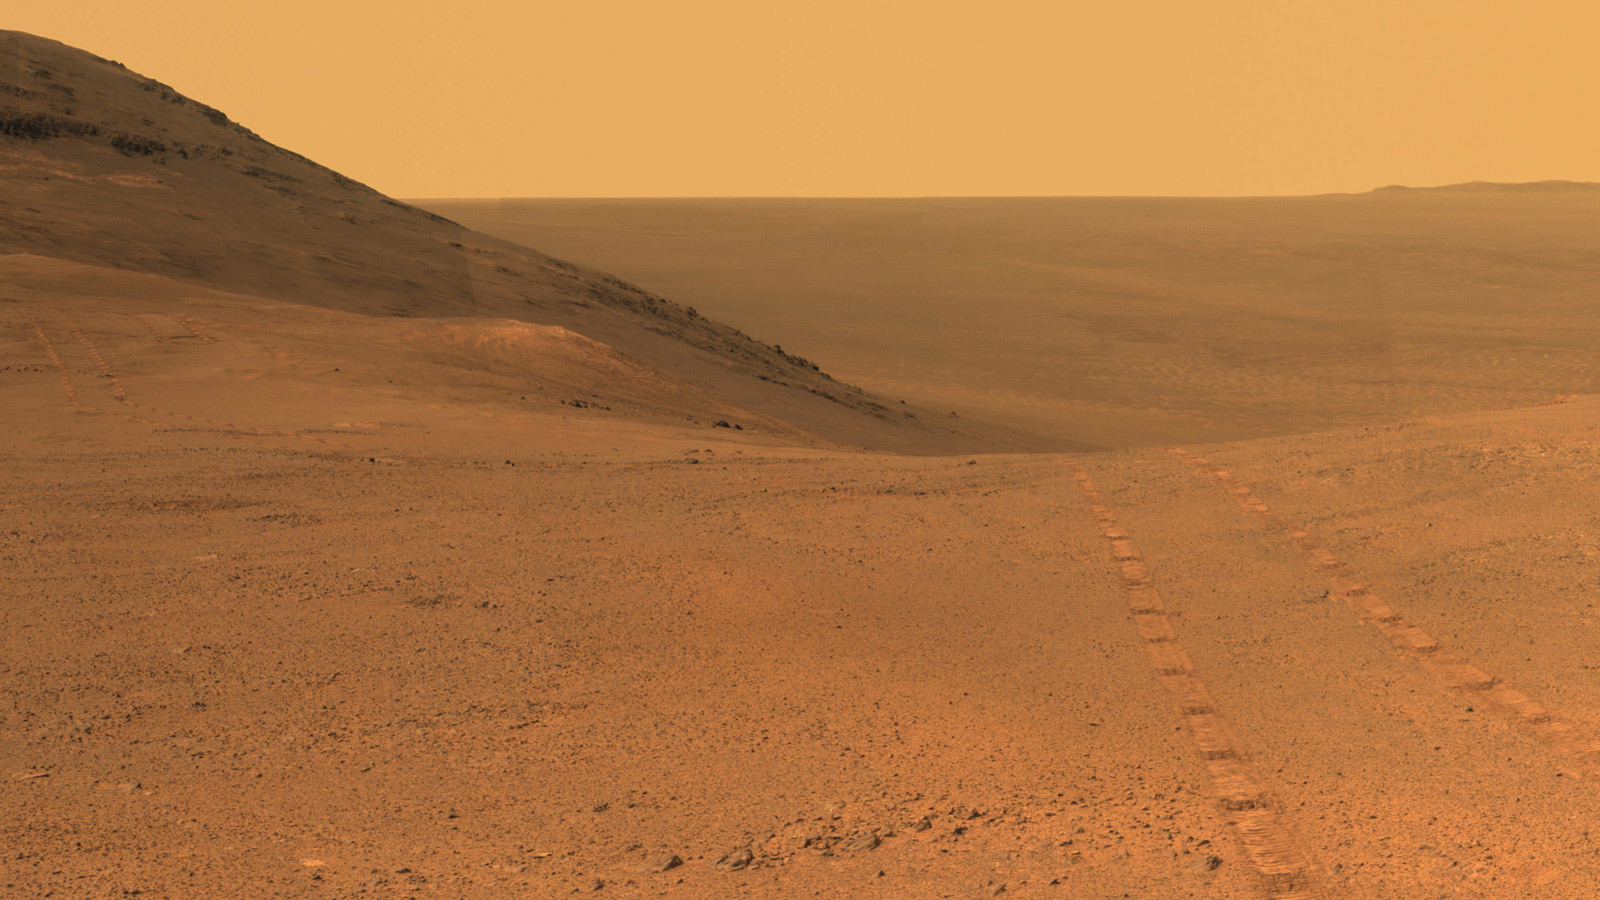 Mars Surface - Rover Tracks